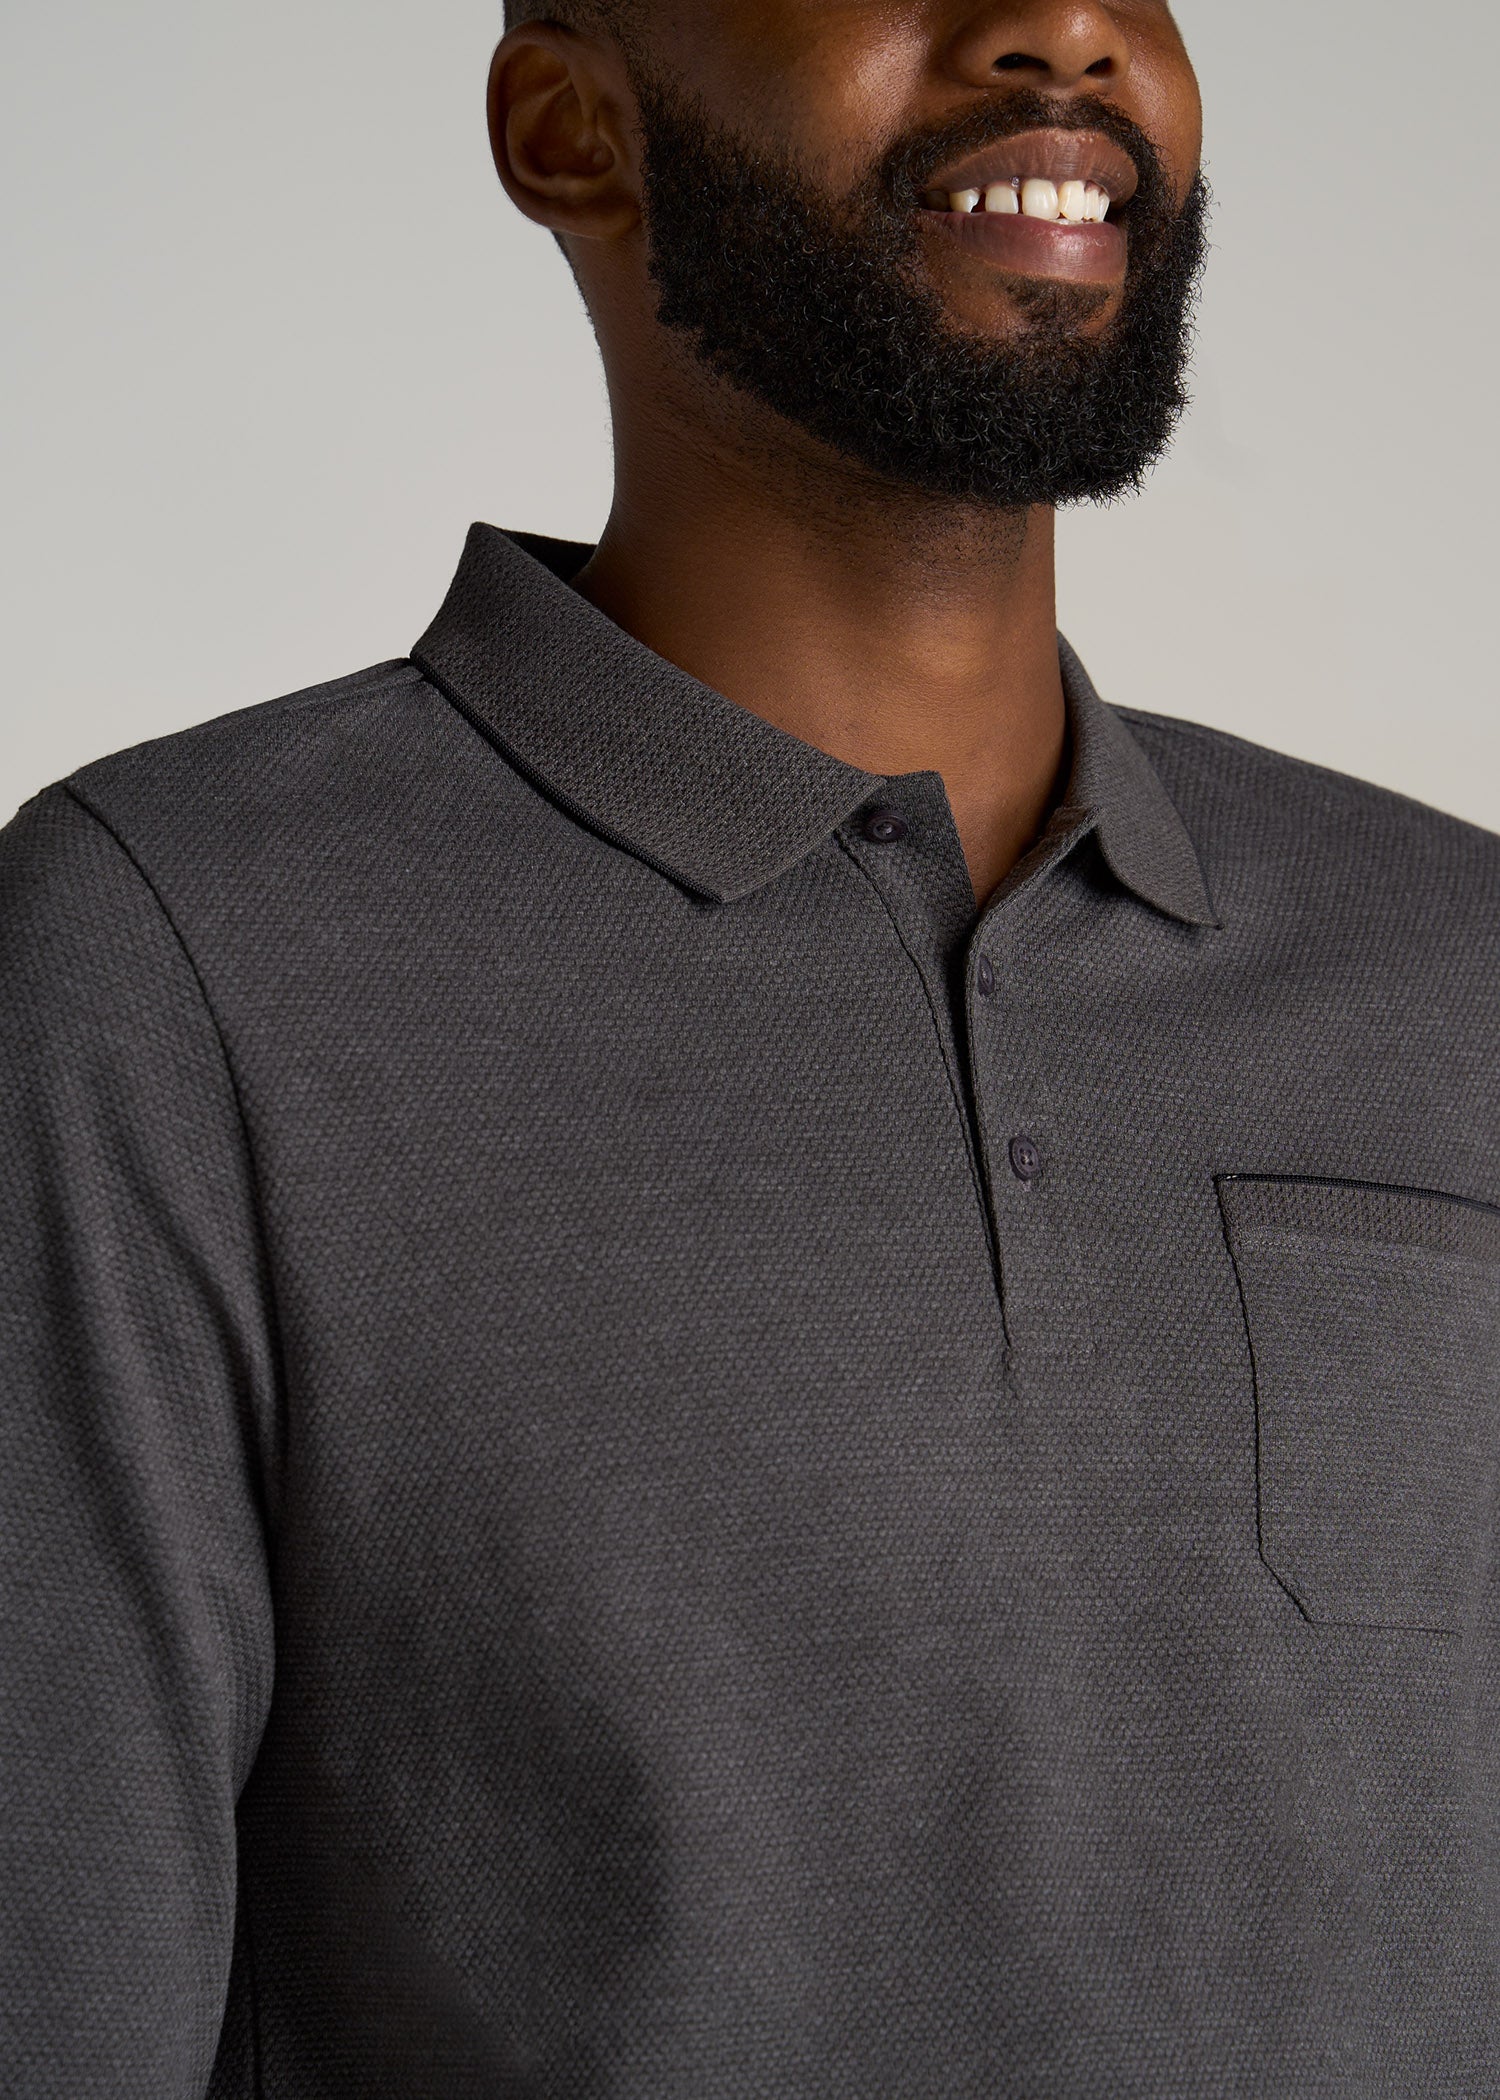 Men's Tall 3-Button Placket Polo Shirt Charcoal Mix Black – American Tall